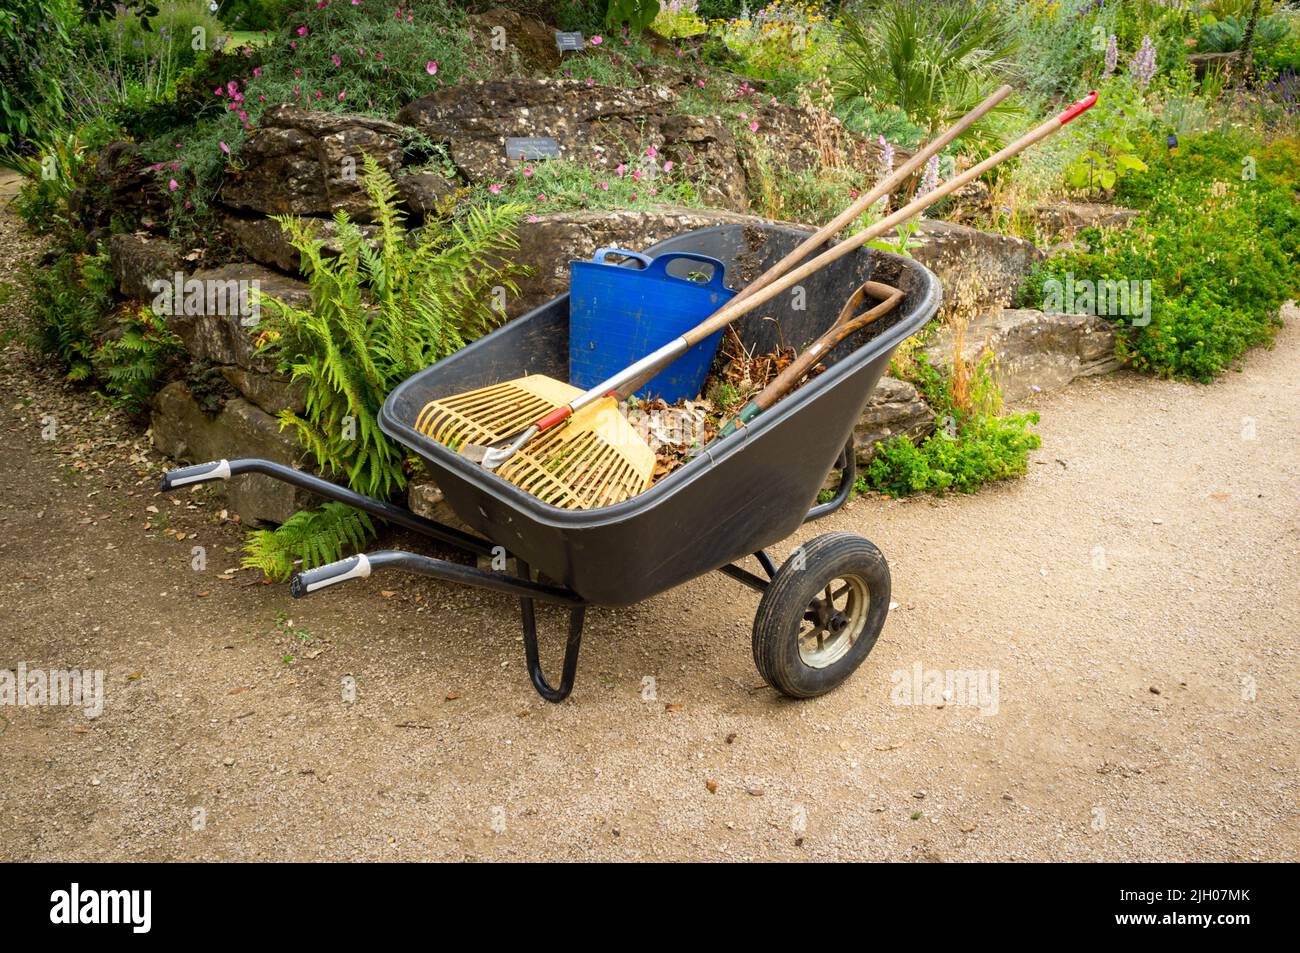 Professional gardeners tools and wheelbarrow in a park, UK Stock Photo